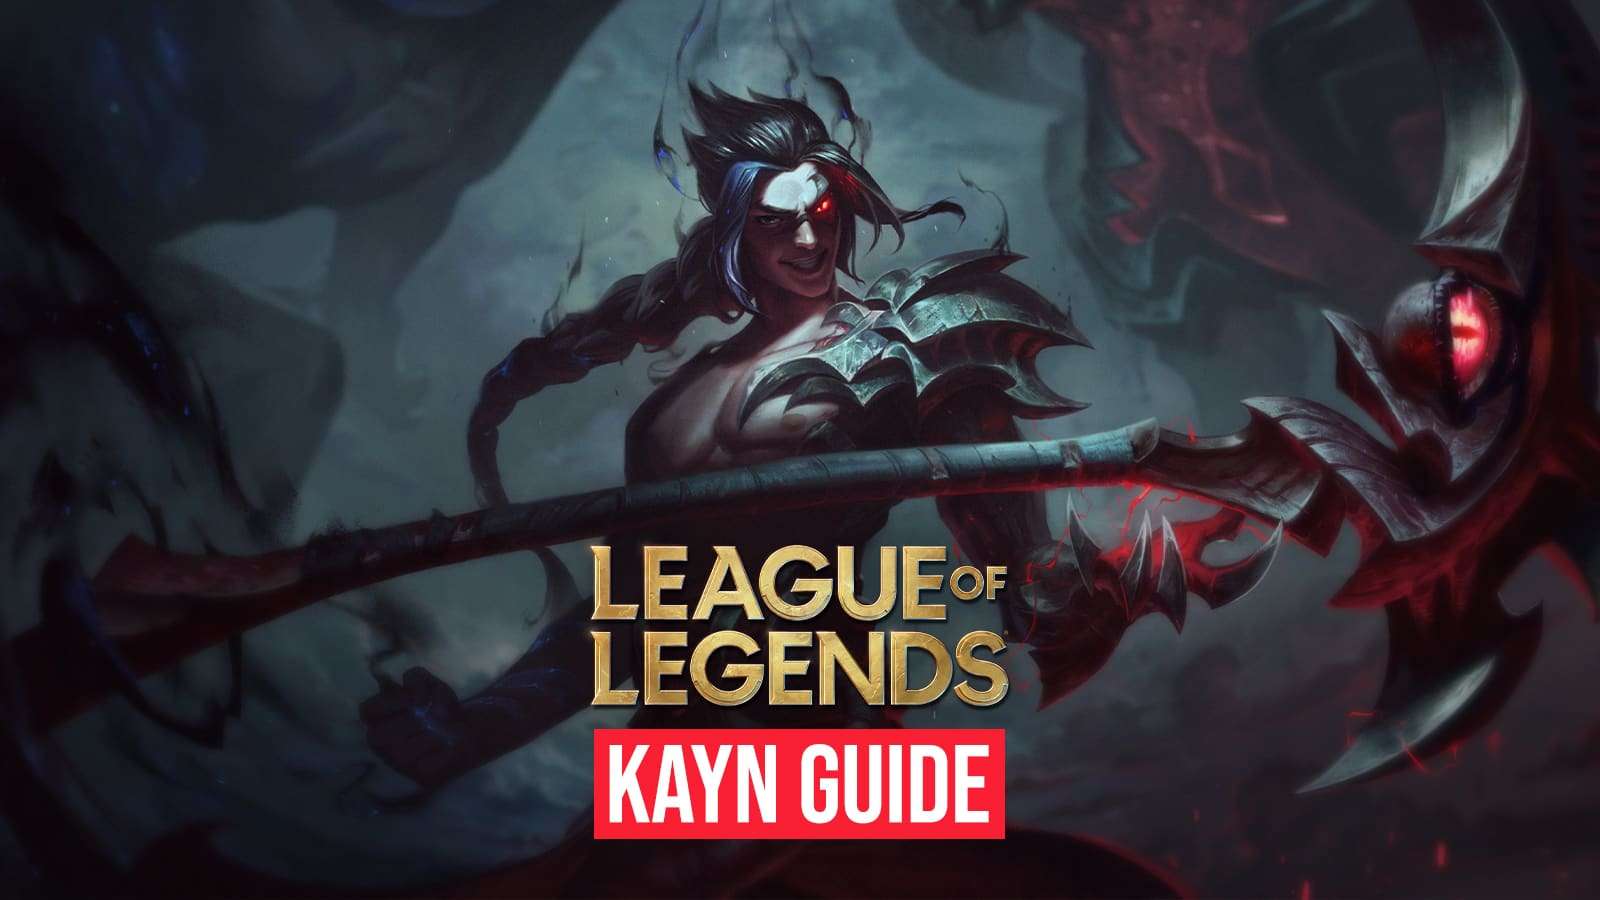 Kayn guide League of Legends best builds runes tips tricks skins